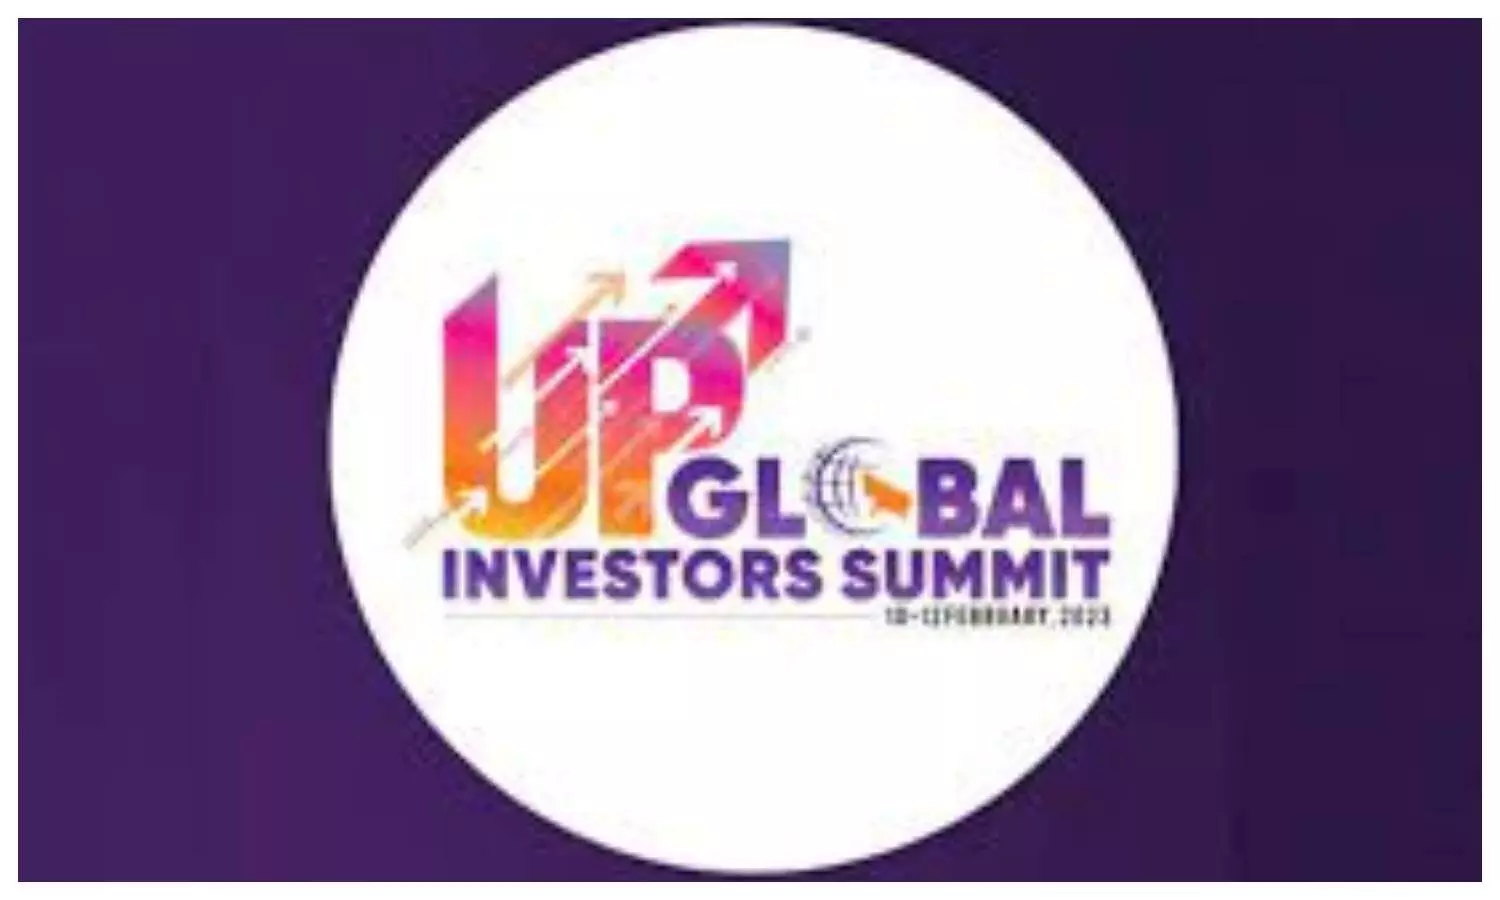 UP Global Investors Summit 2023